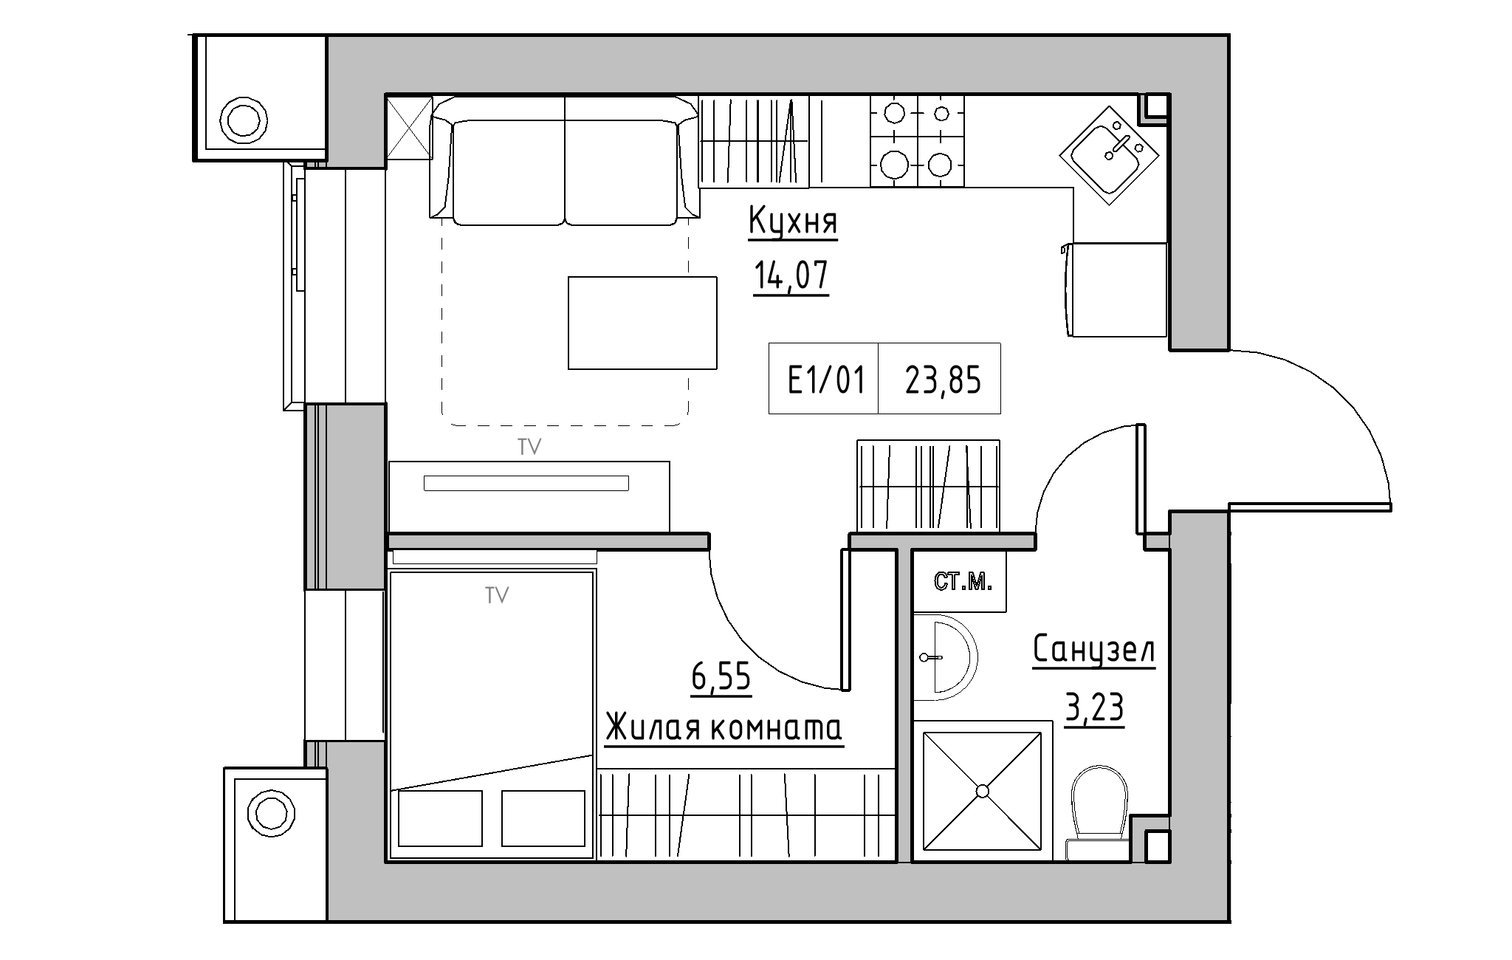 Planning 1-rm flats area 23.85m2, KS-013-05/0003.